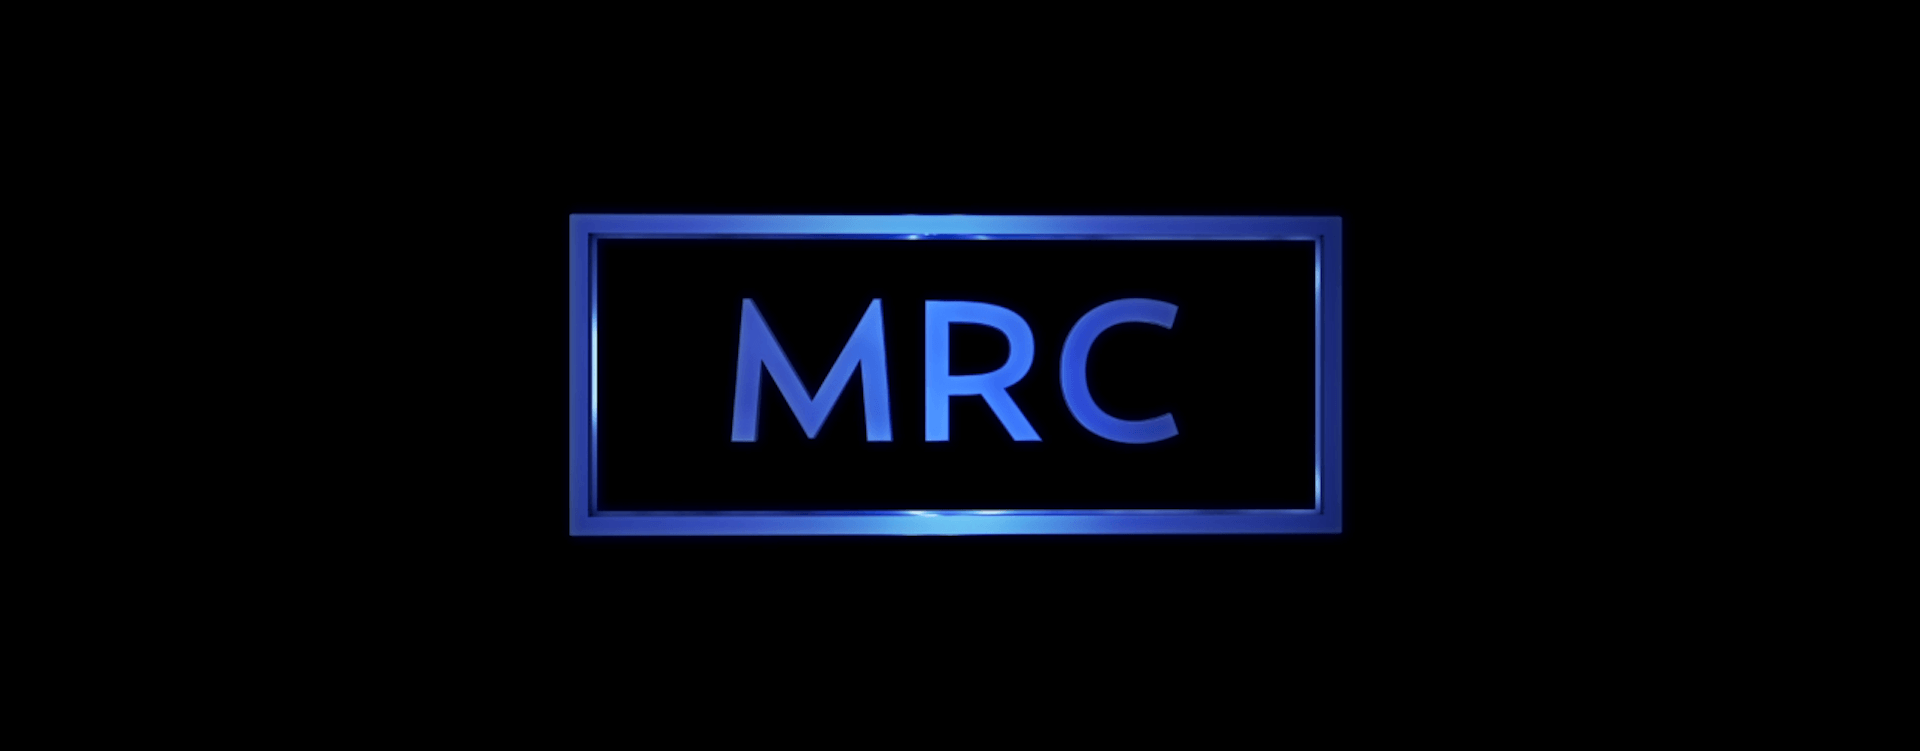 MRC Logo - Mrc logo.png